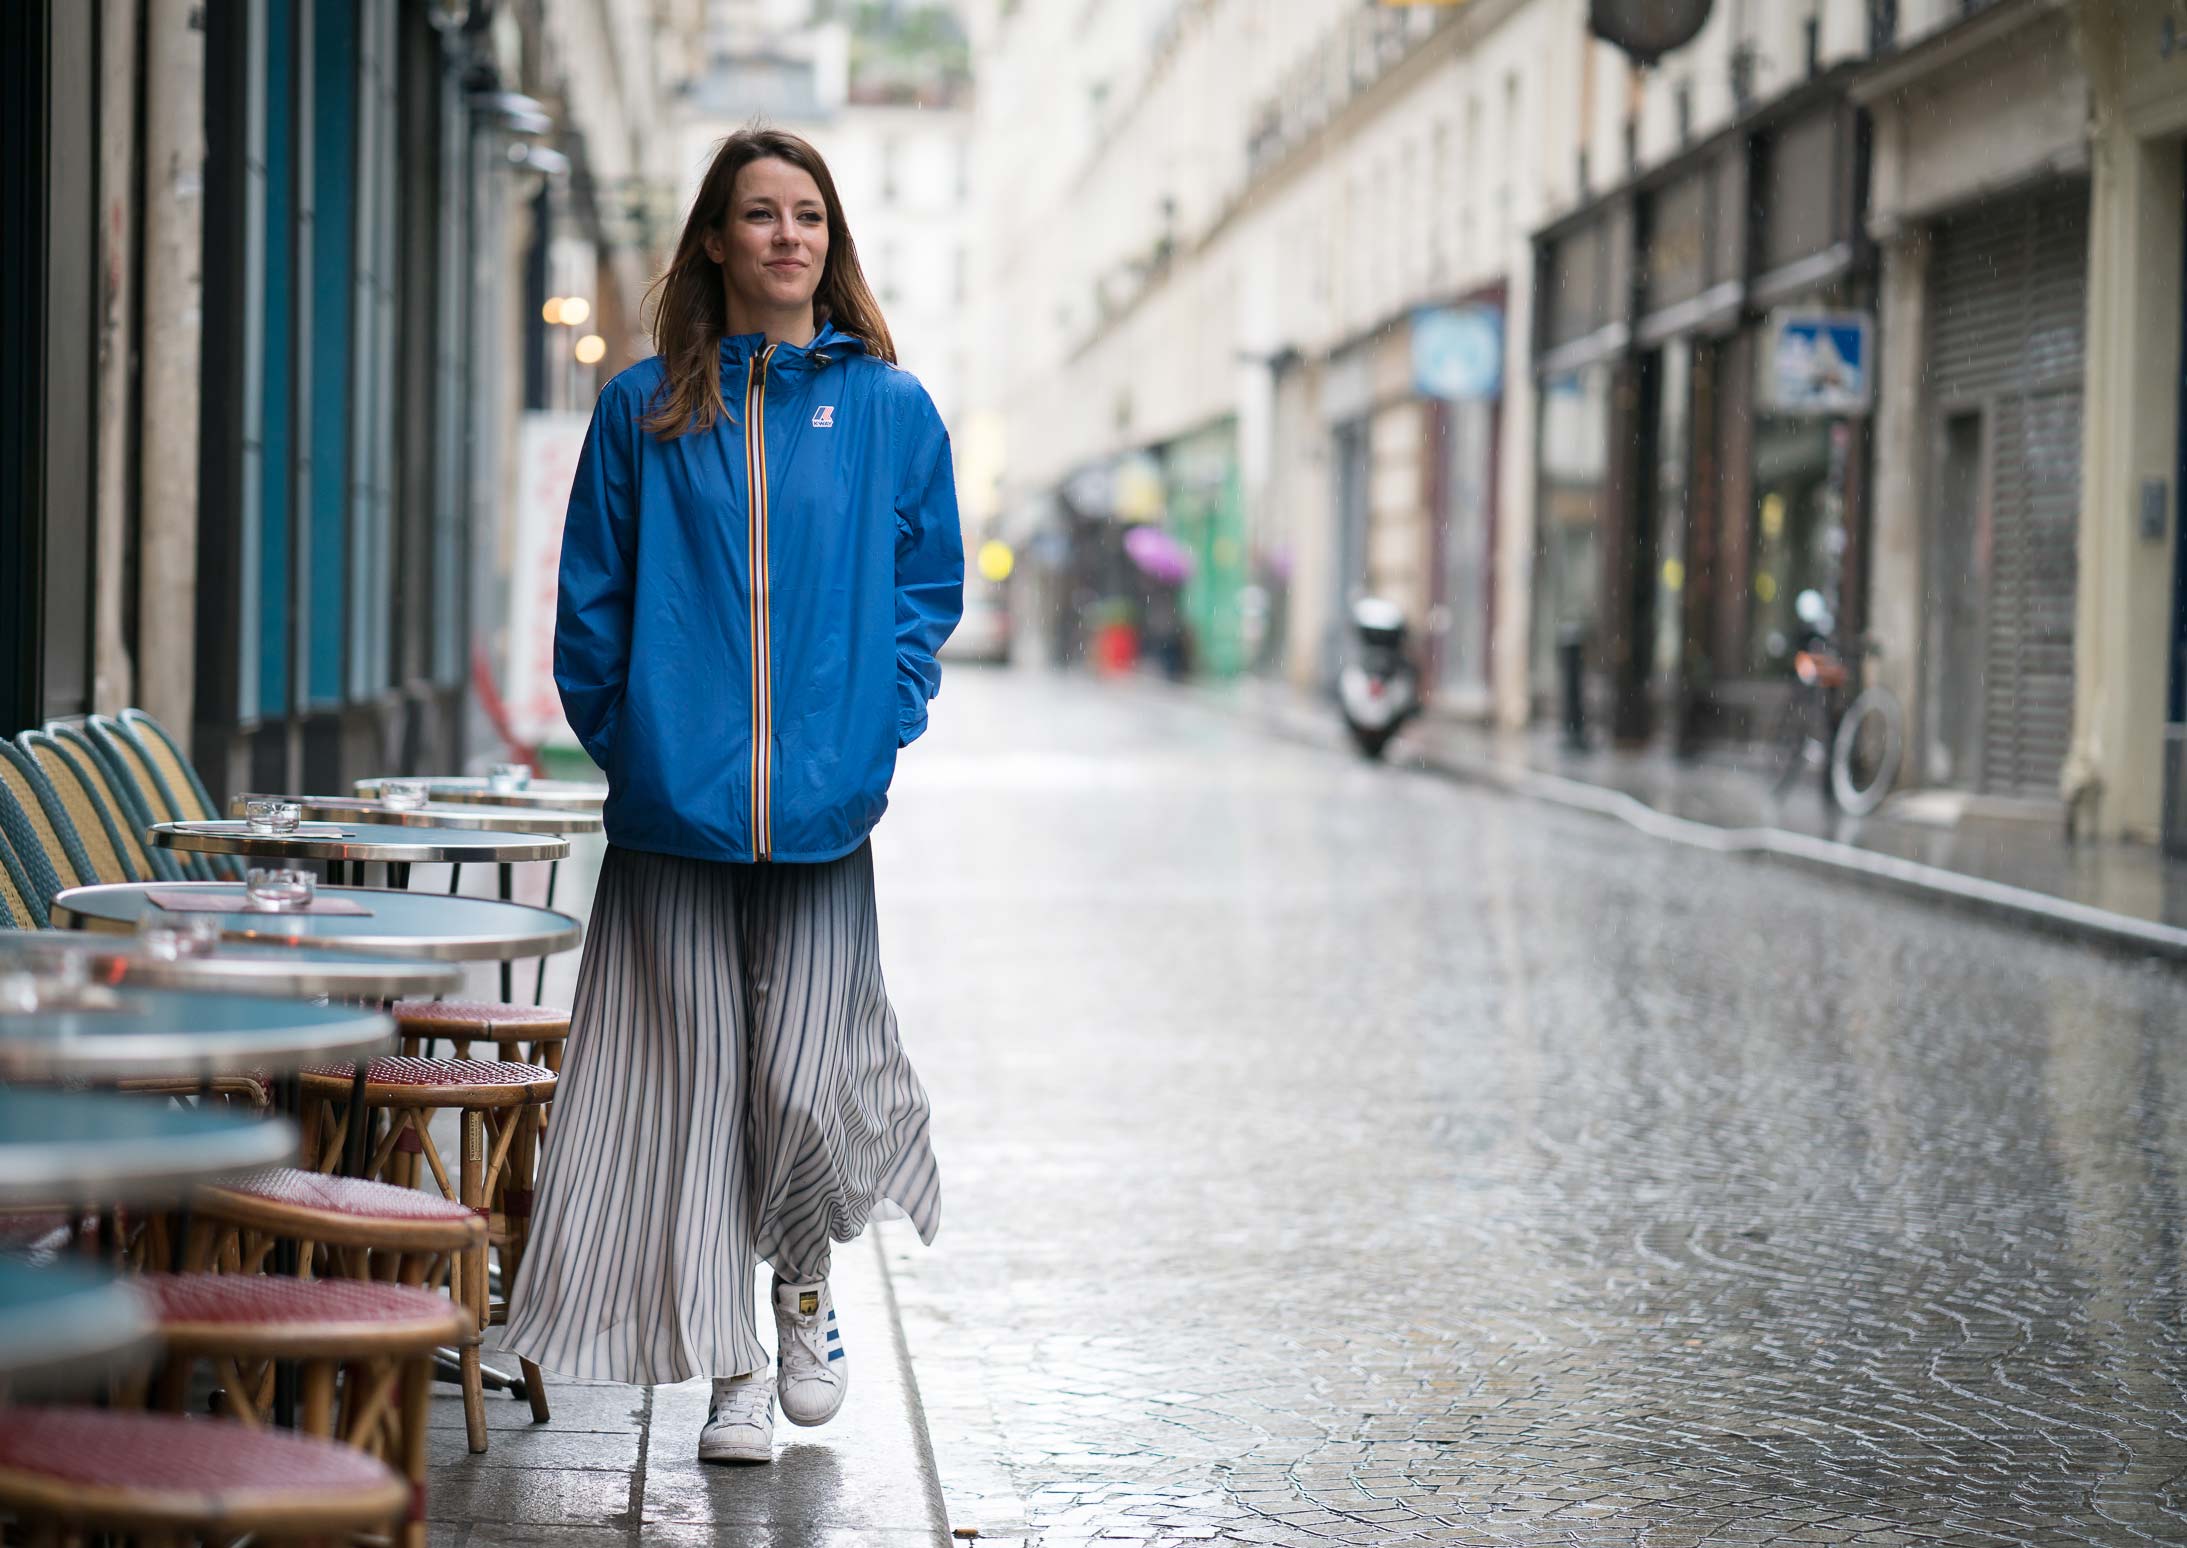 Women wearing a Blue Royal Le Vrai Claude K-Way (Kiwi) Jacket in rainy weather in Paris